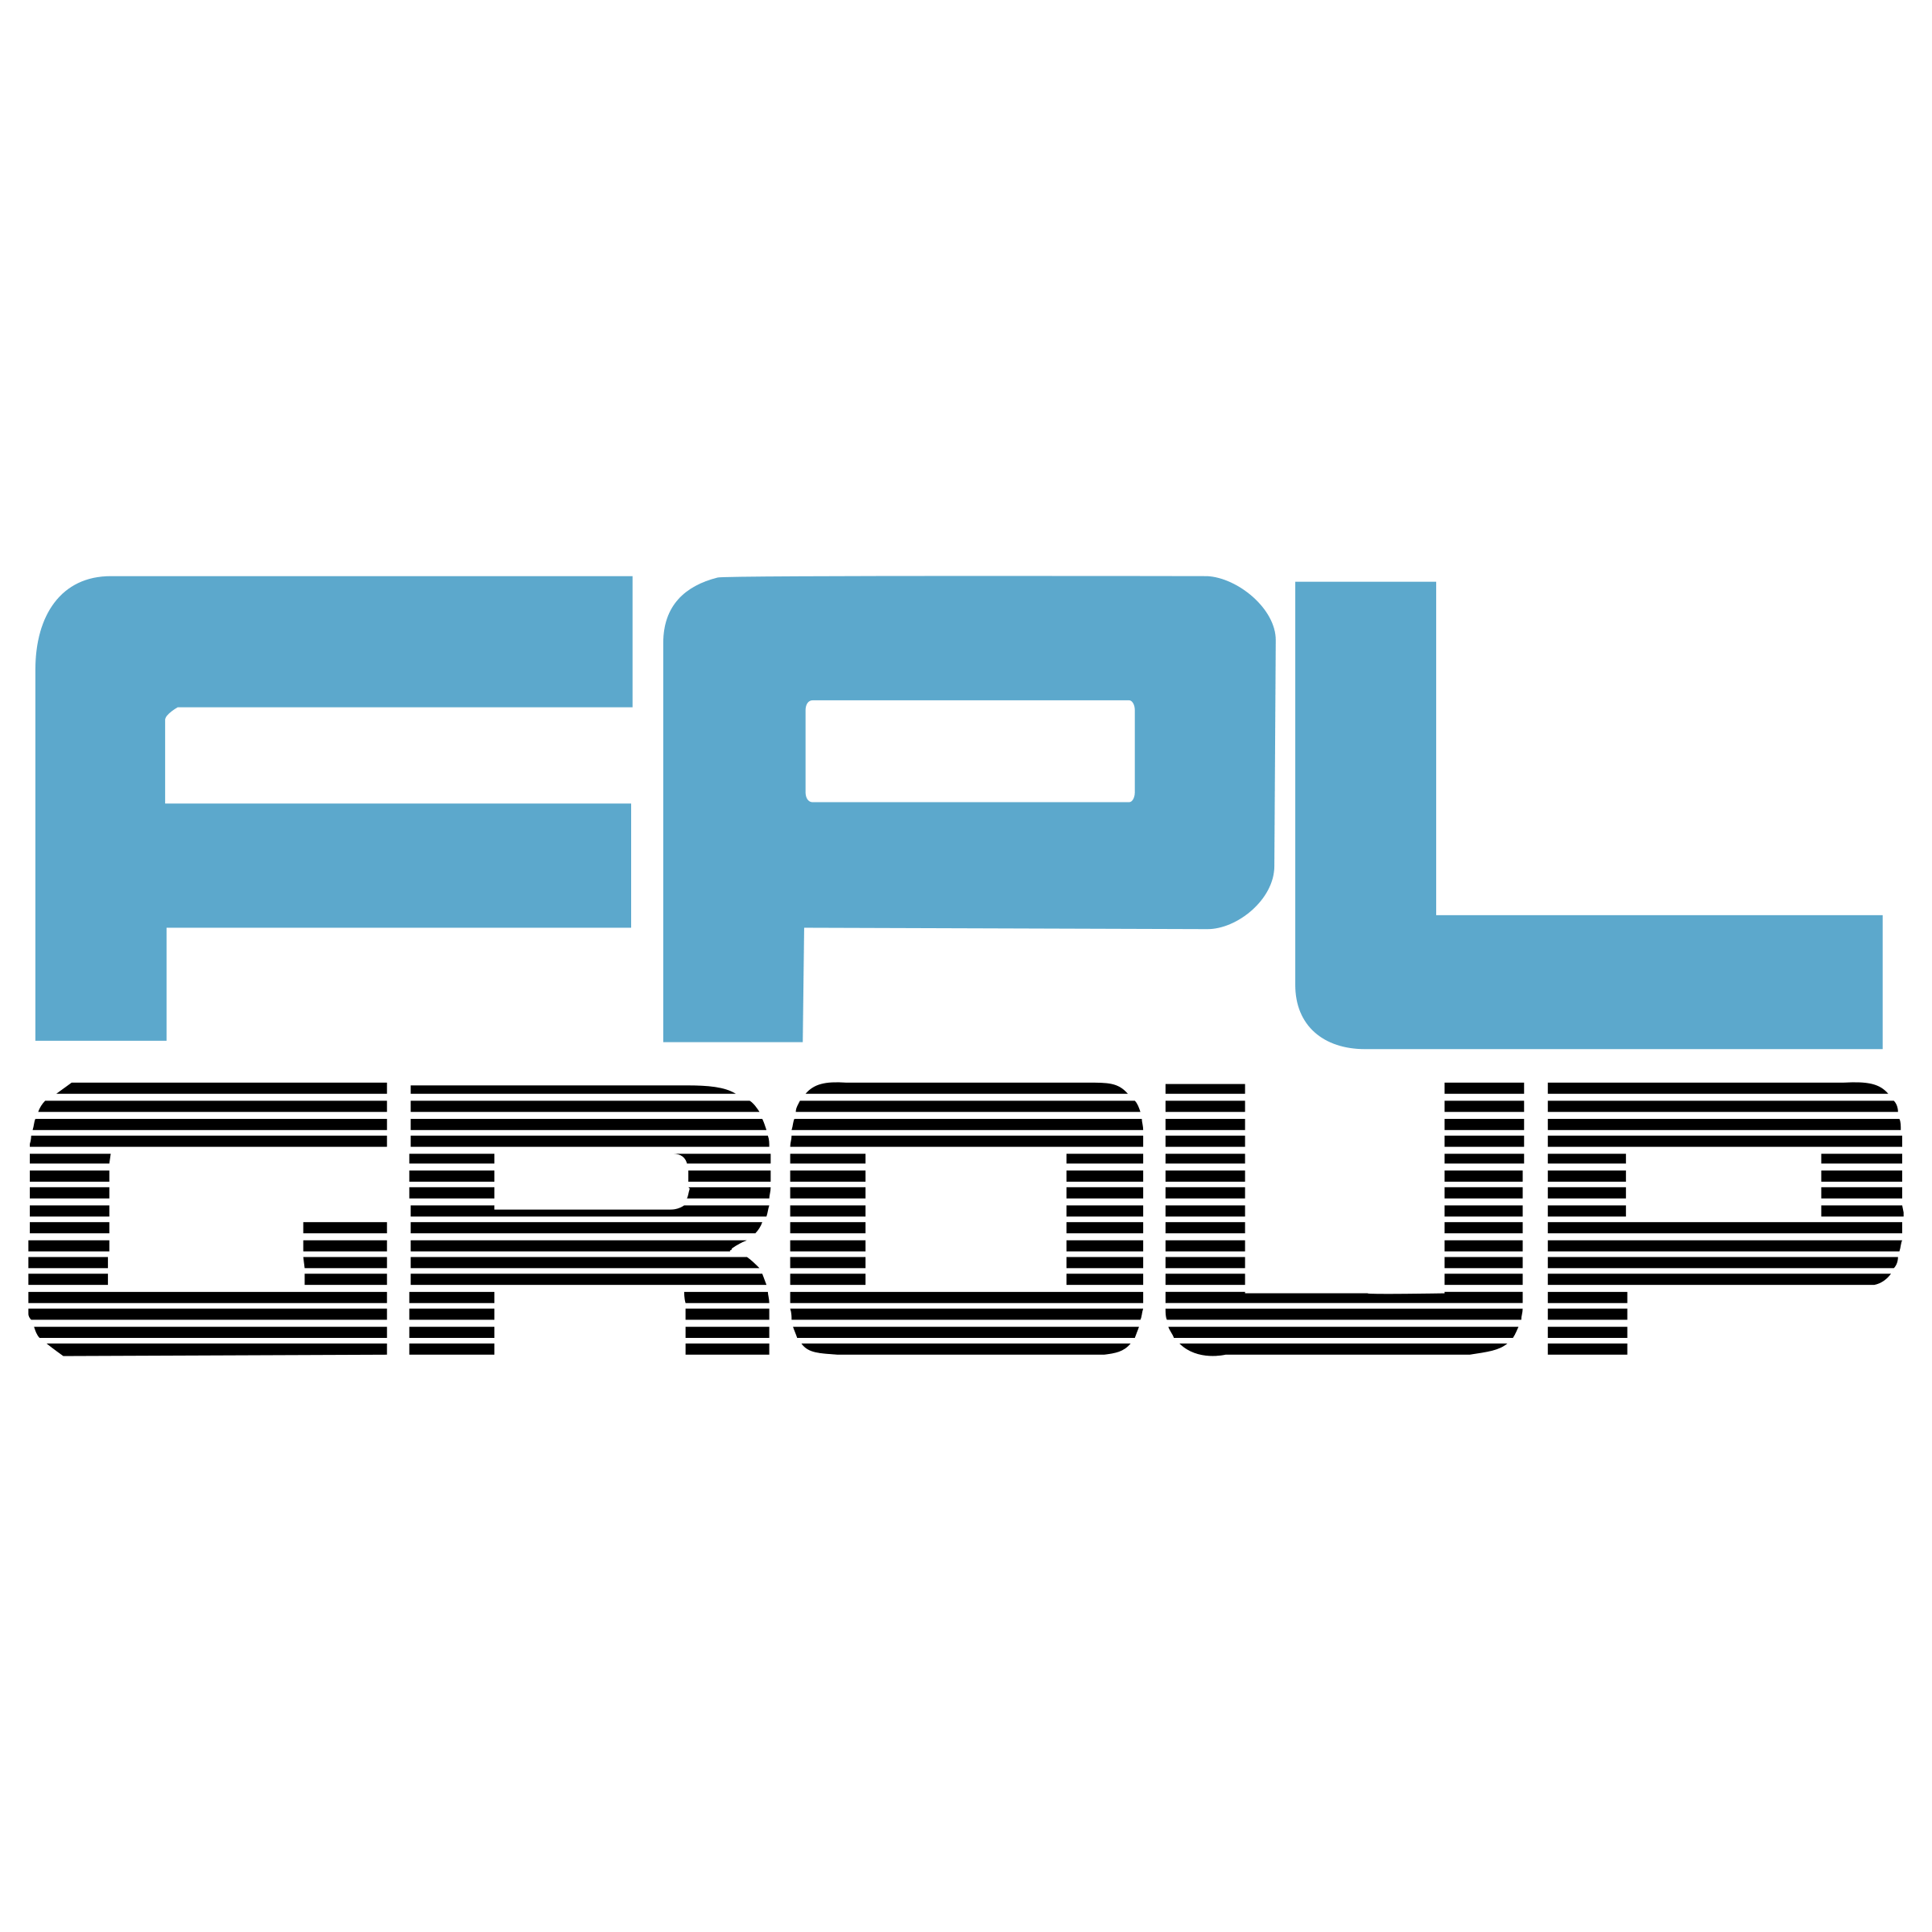 FPL Logo - FPL Group Logo PNG Transparent & SVG Vector - Freebie Supply